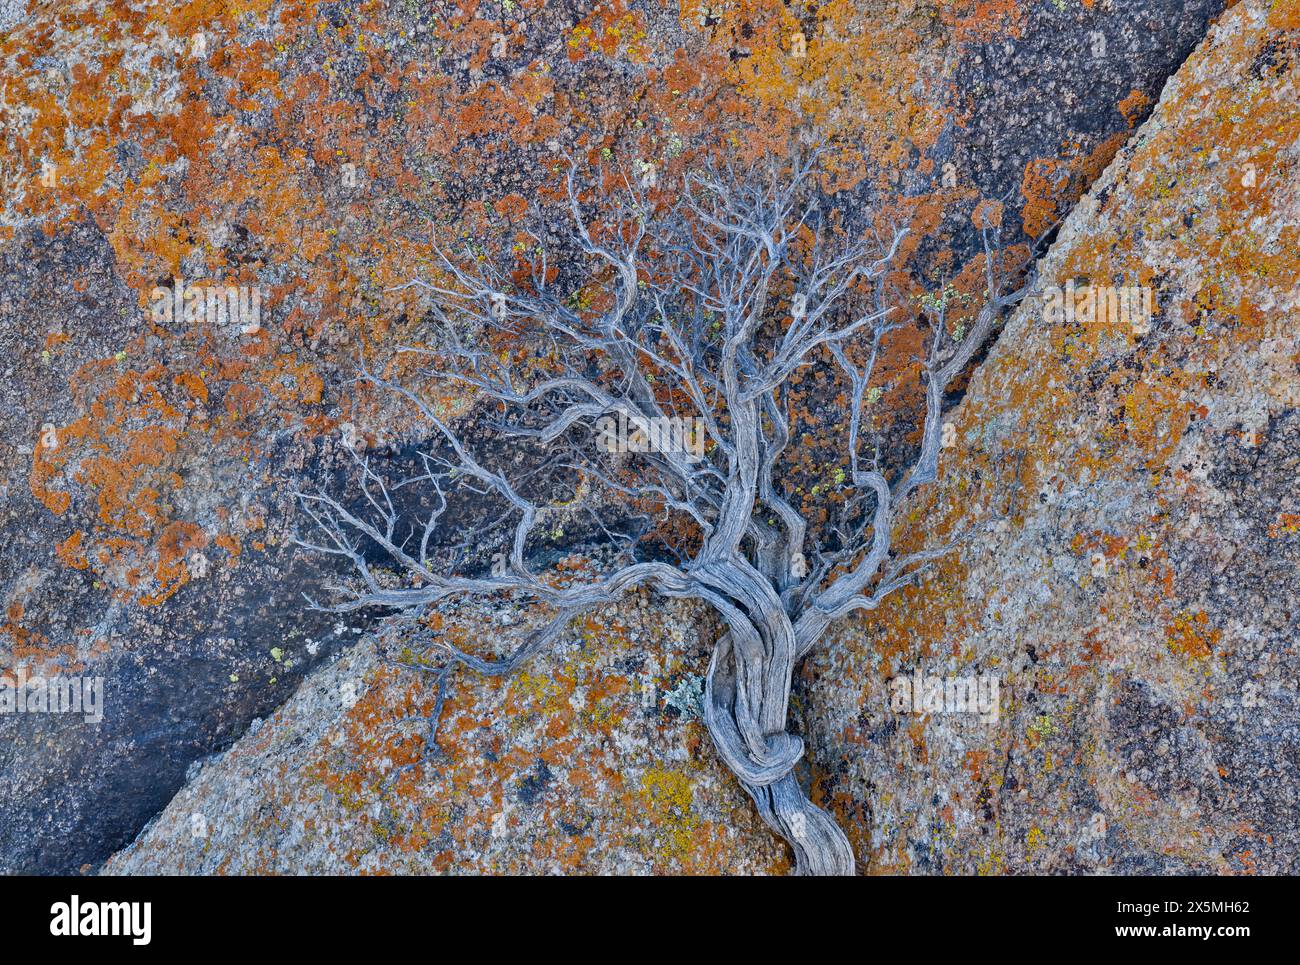 USA, California, Lone Pine, Inyo County. Alabama Hills lichen covered rocks with dried brush Stock Photo